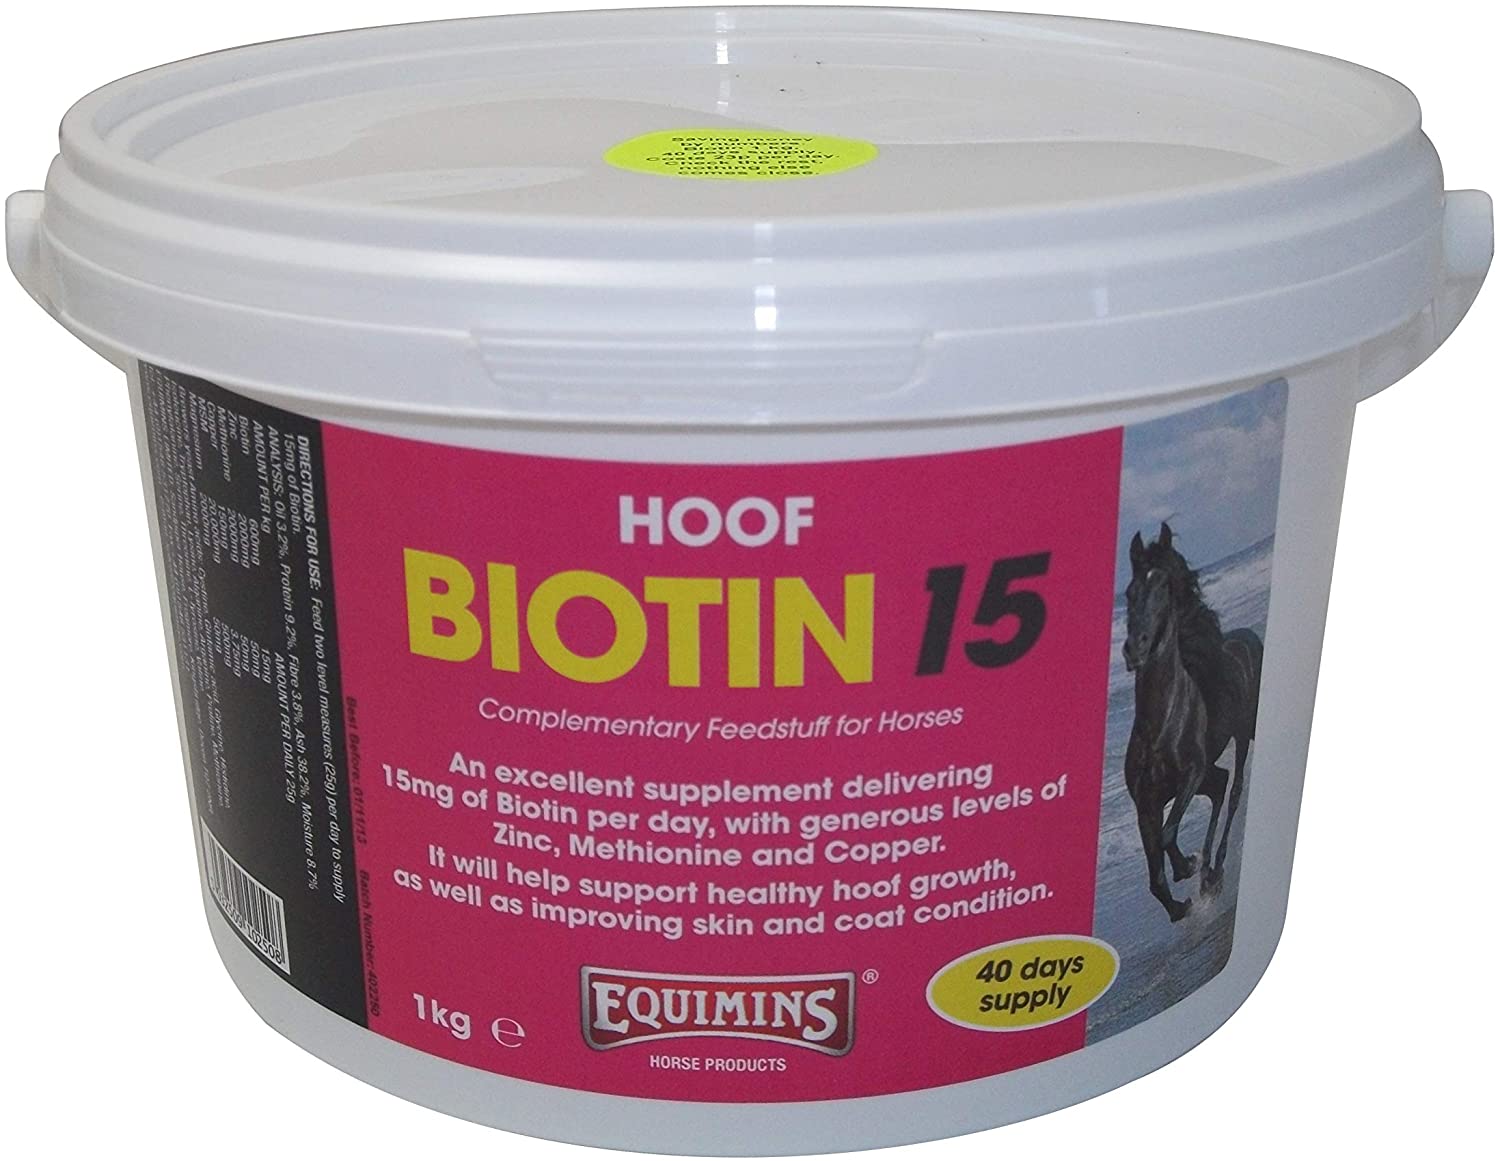  Equimins EQS0033 Suplemento Biotina 15, Unisex Adulto, Transparente, 1 kg 